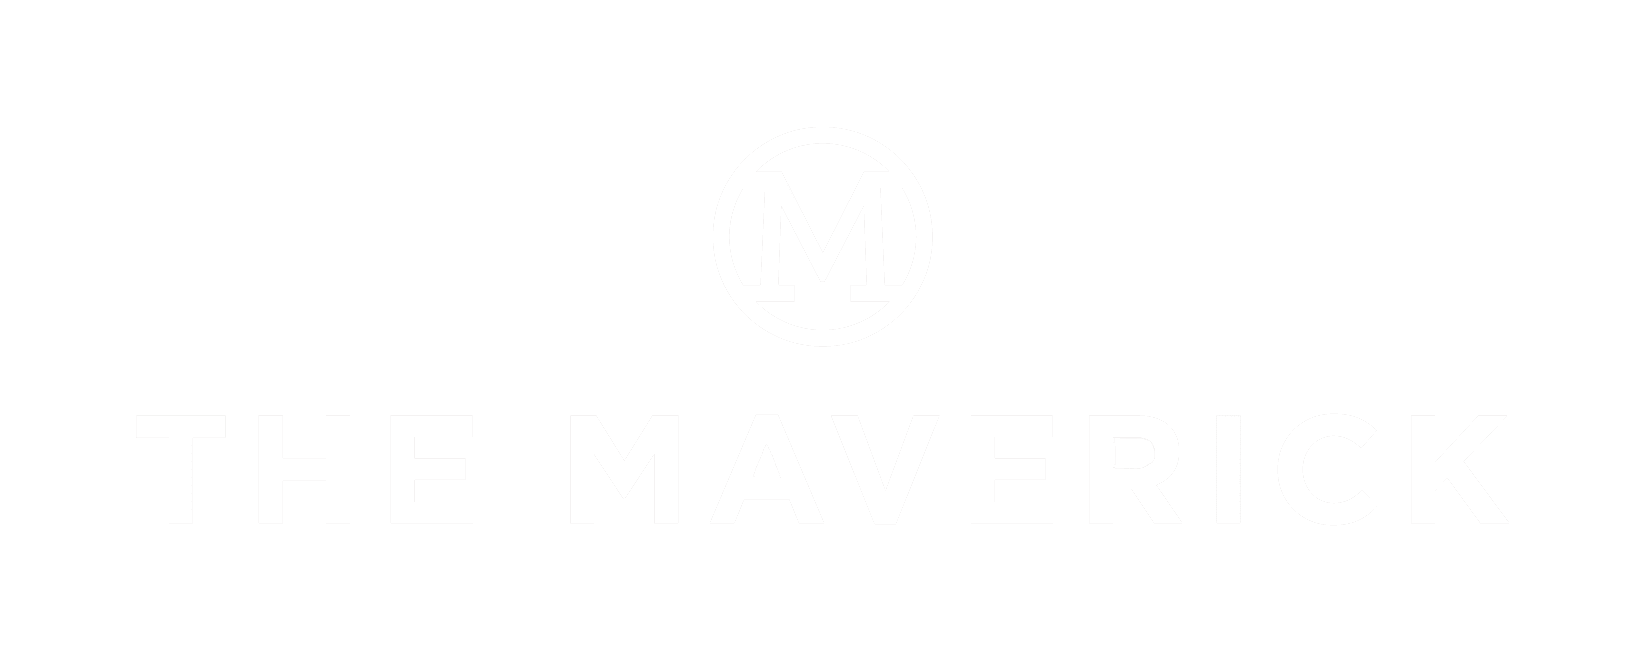 The Maverick logo